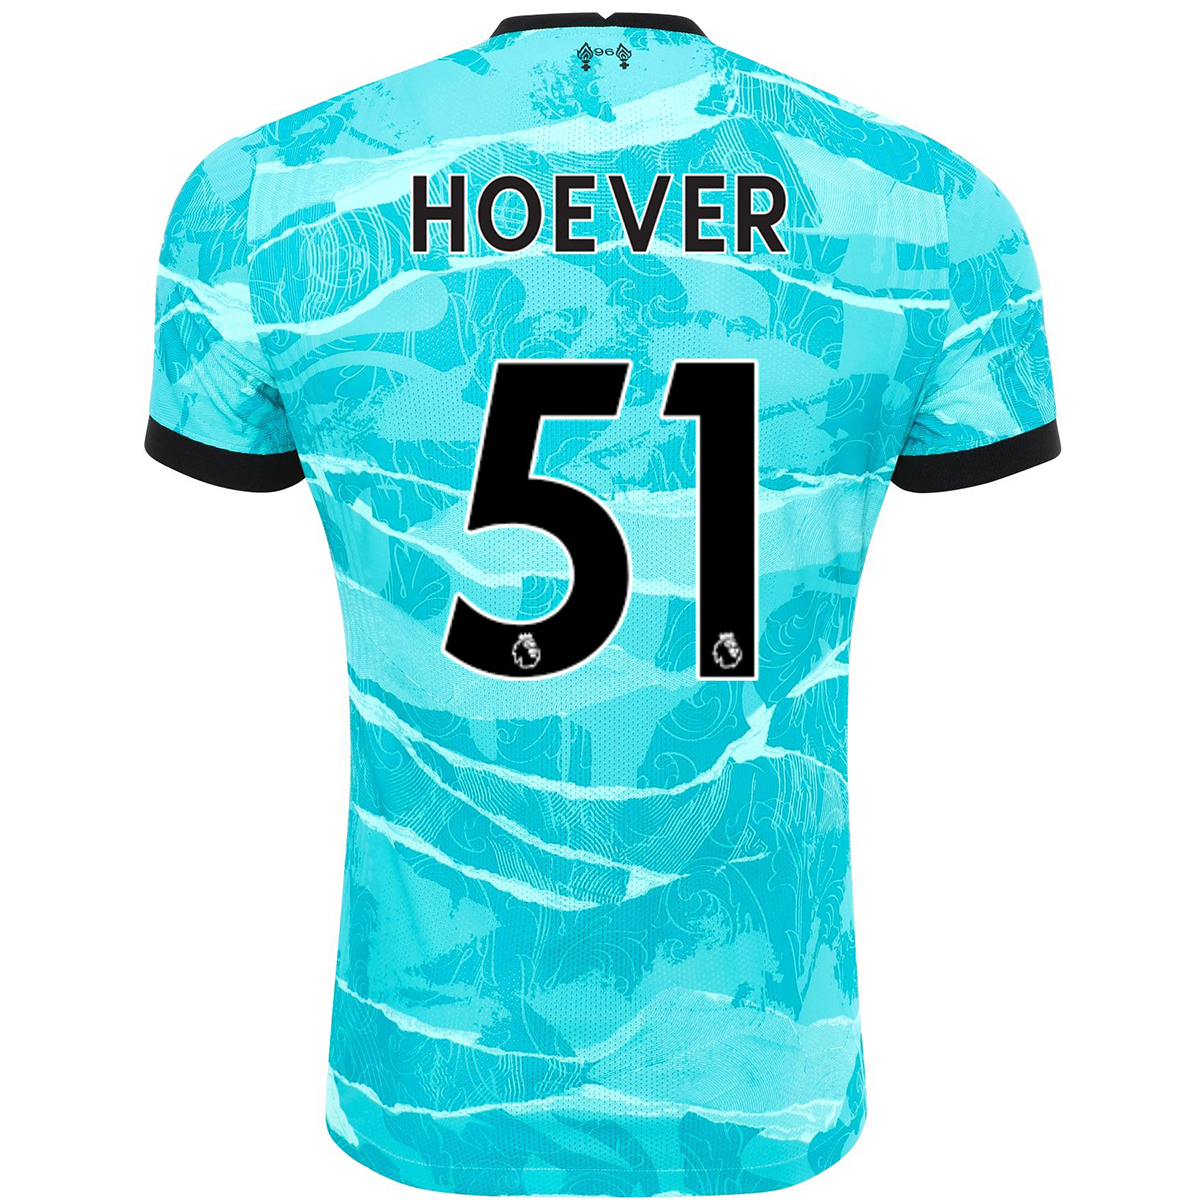 Muži Futbal Ki-jana Hoever #51 Vonkajší Modrá Dresy 2020/21 Košele Dres